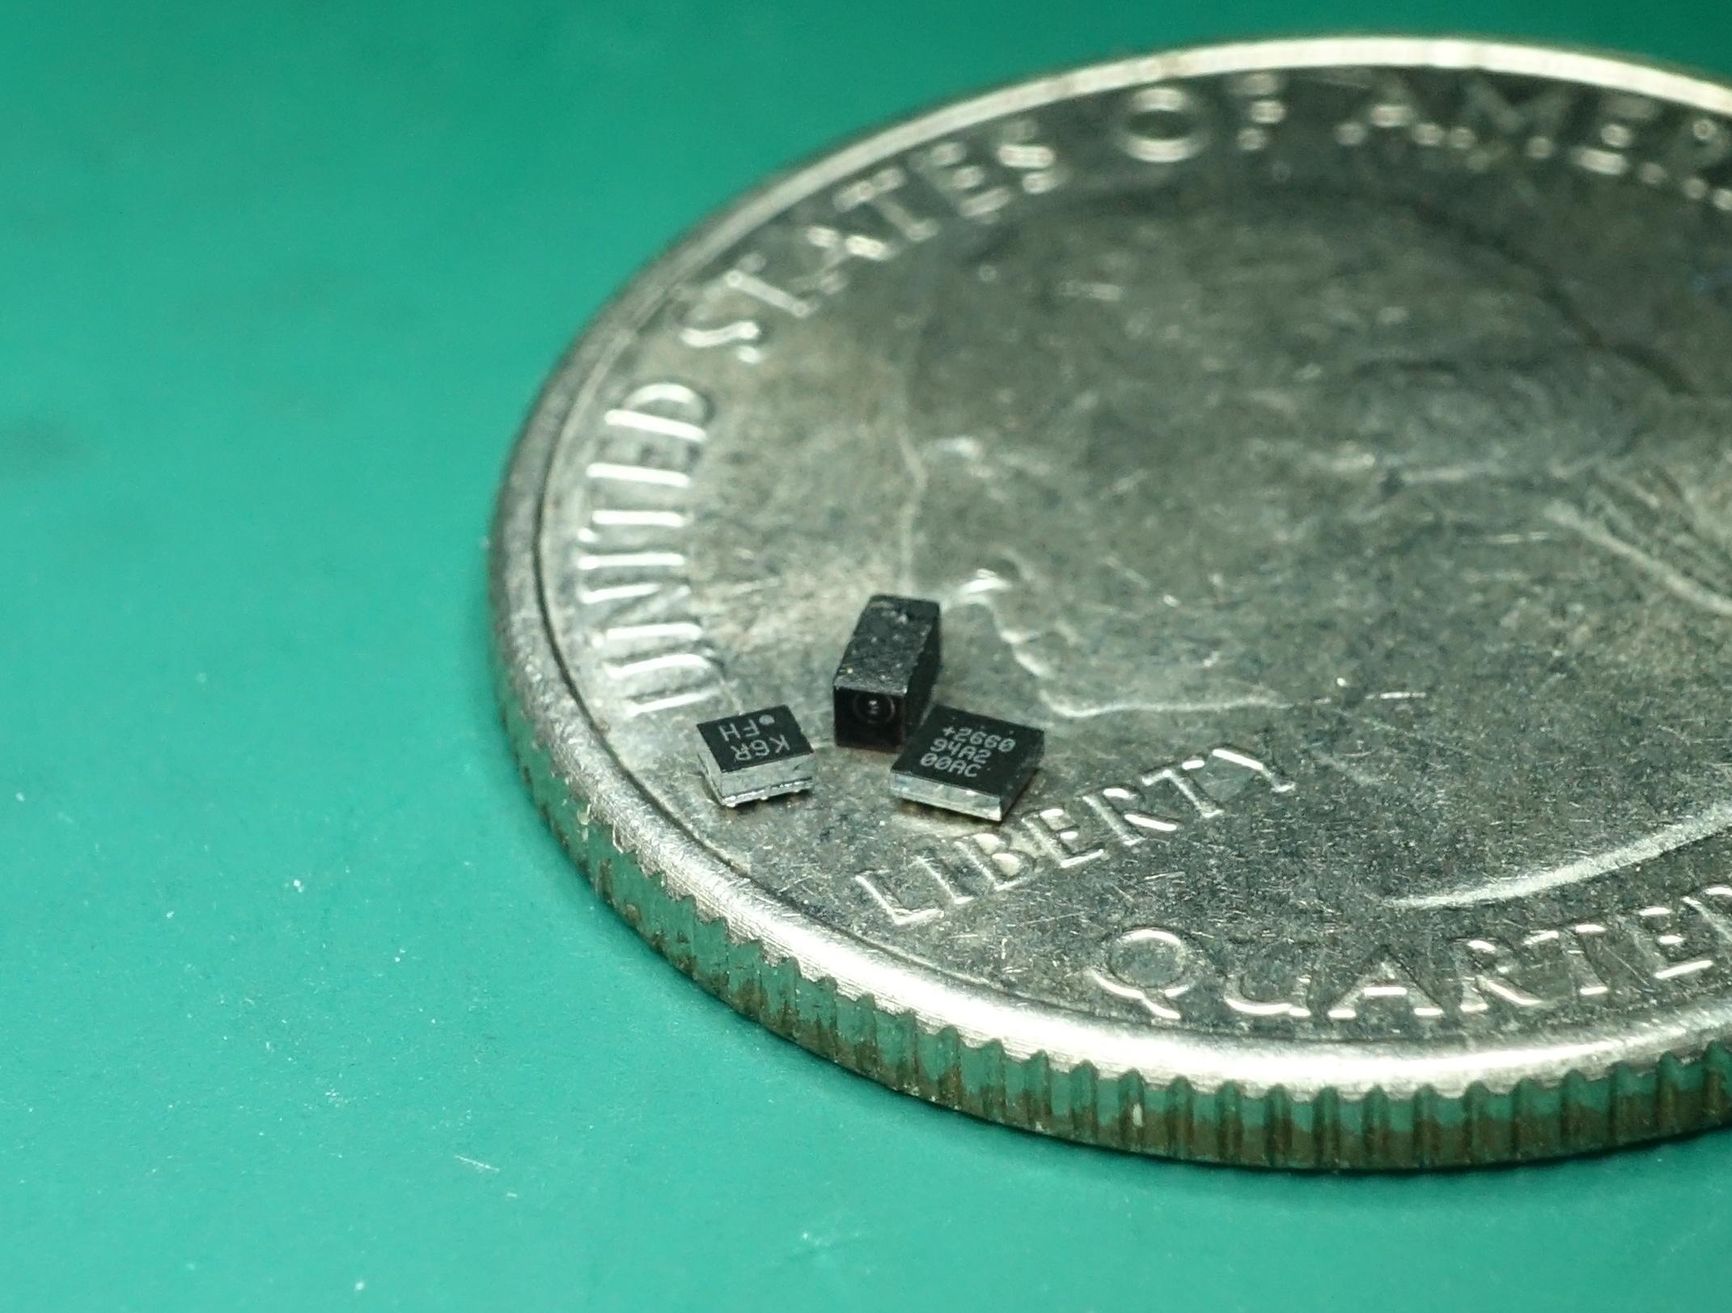 a-photo-of-three-tiny-black-electronic-c